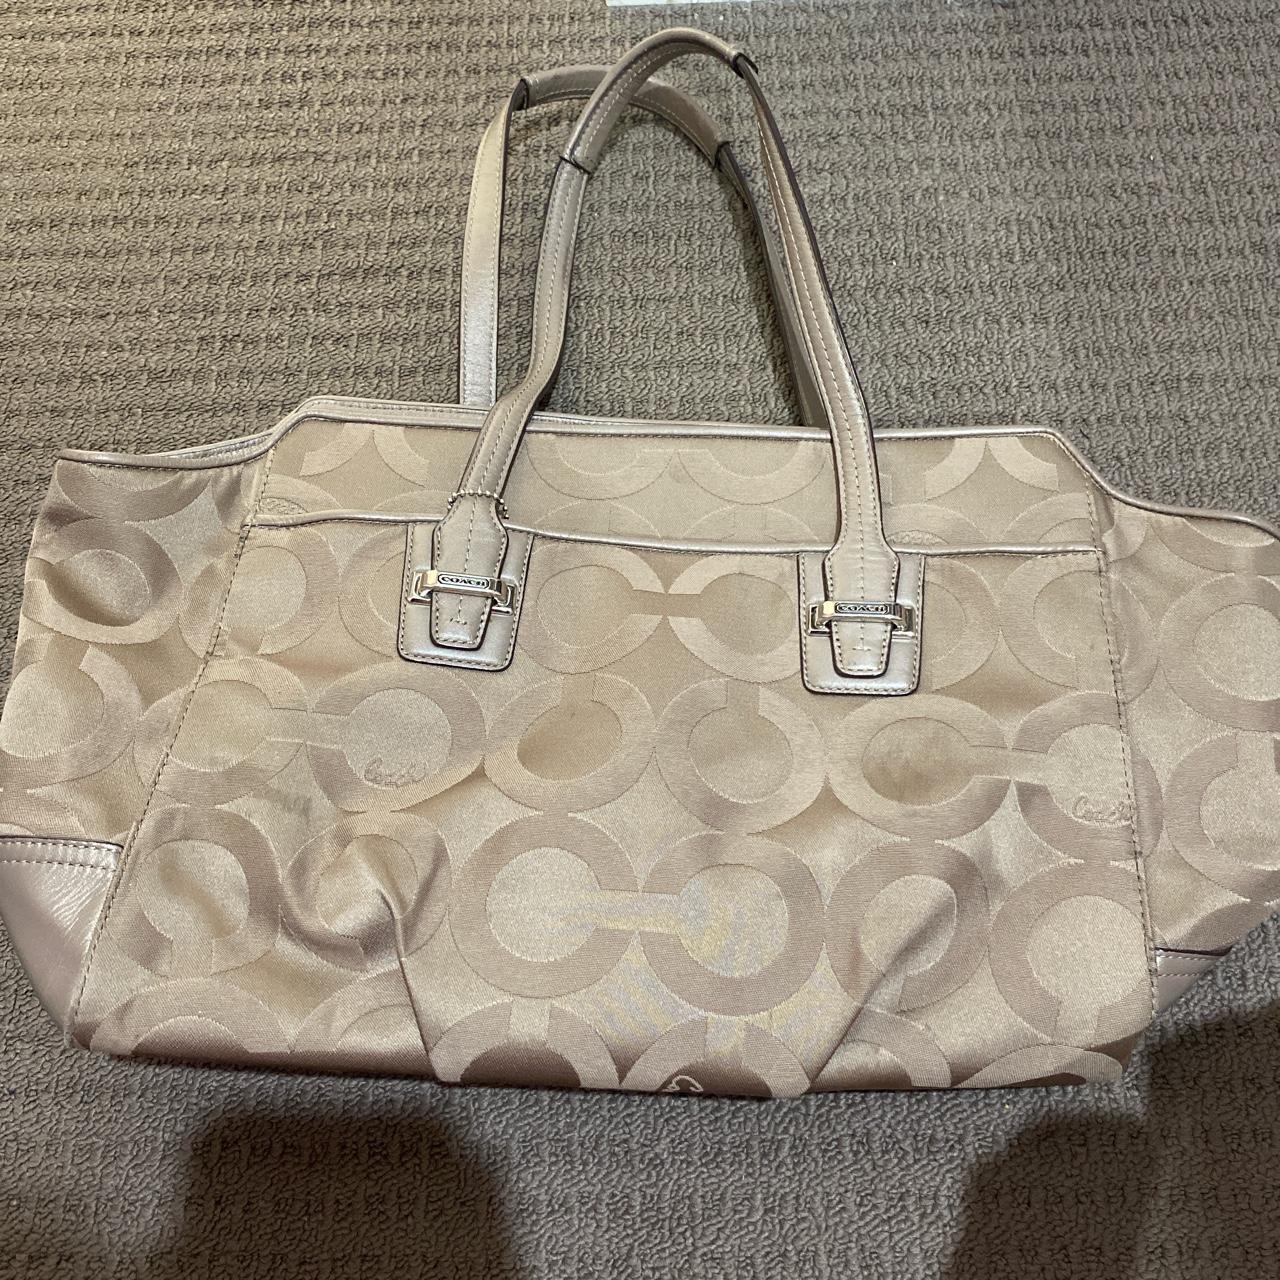 Vintage coach brown large handbag / tote bag. In a... - Depop